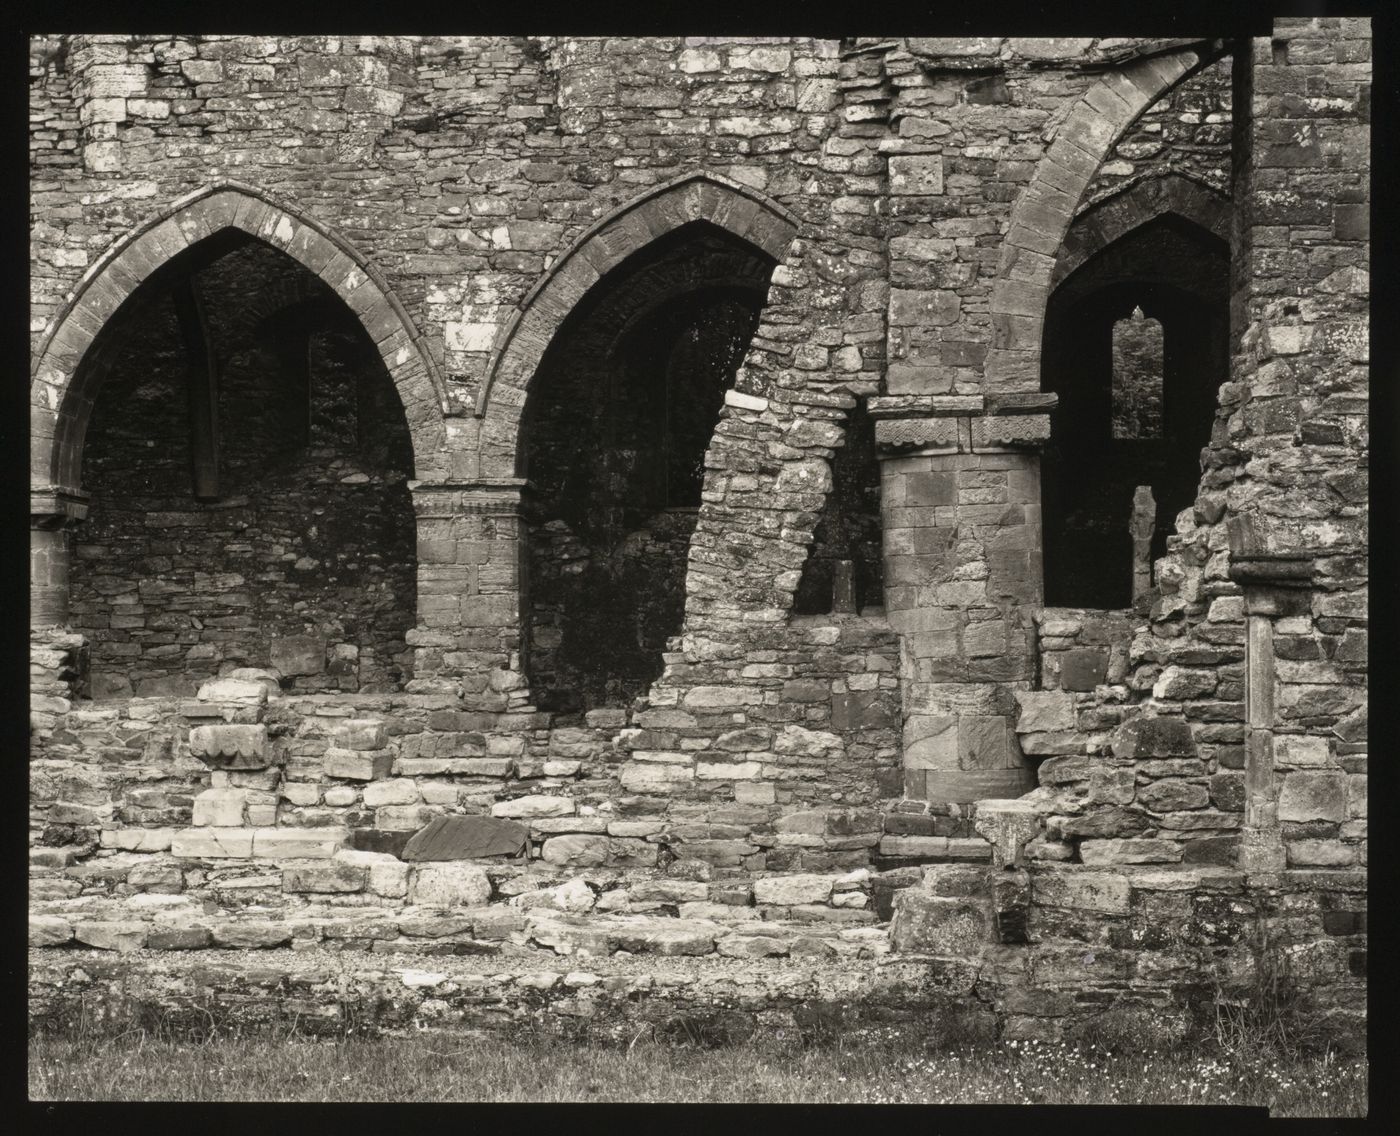 Arched façade of castle ruins, County Kilkenny, Ireland